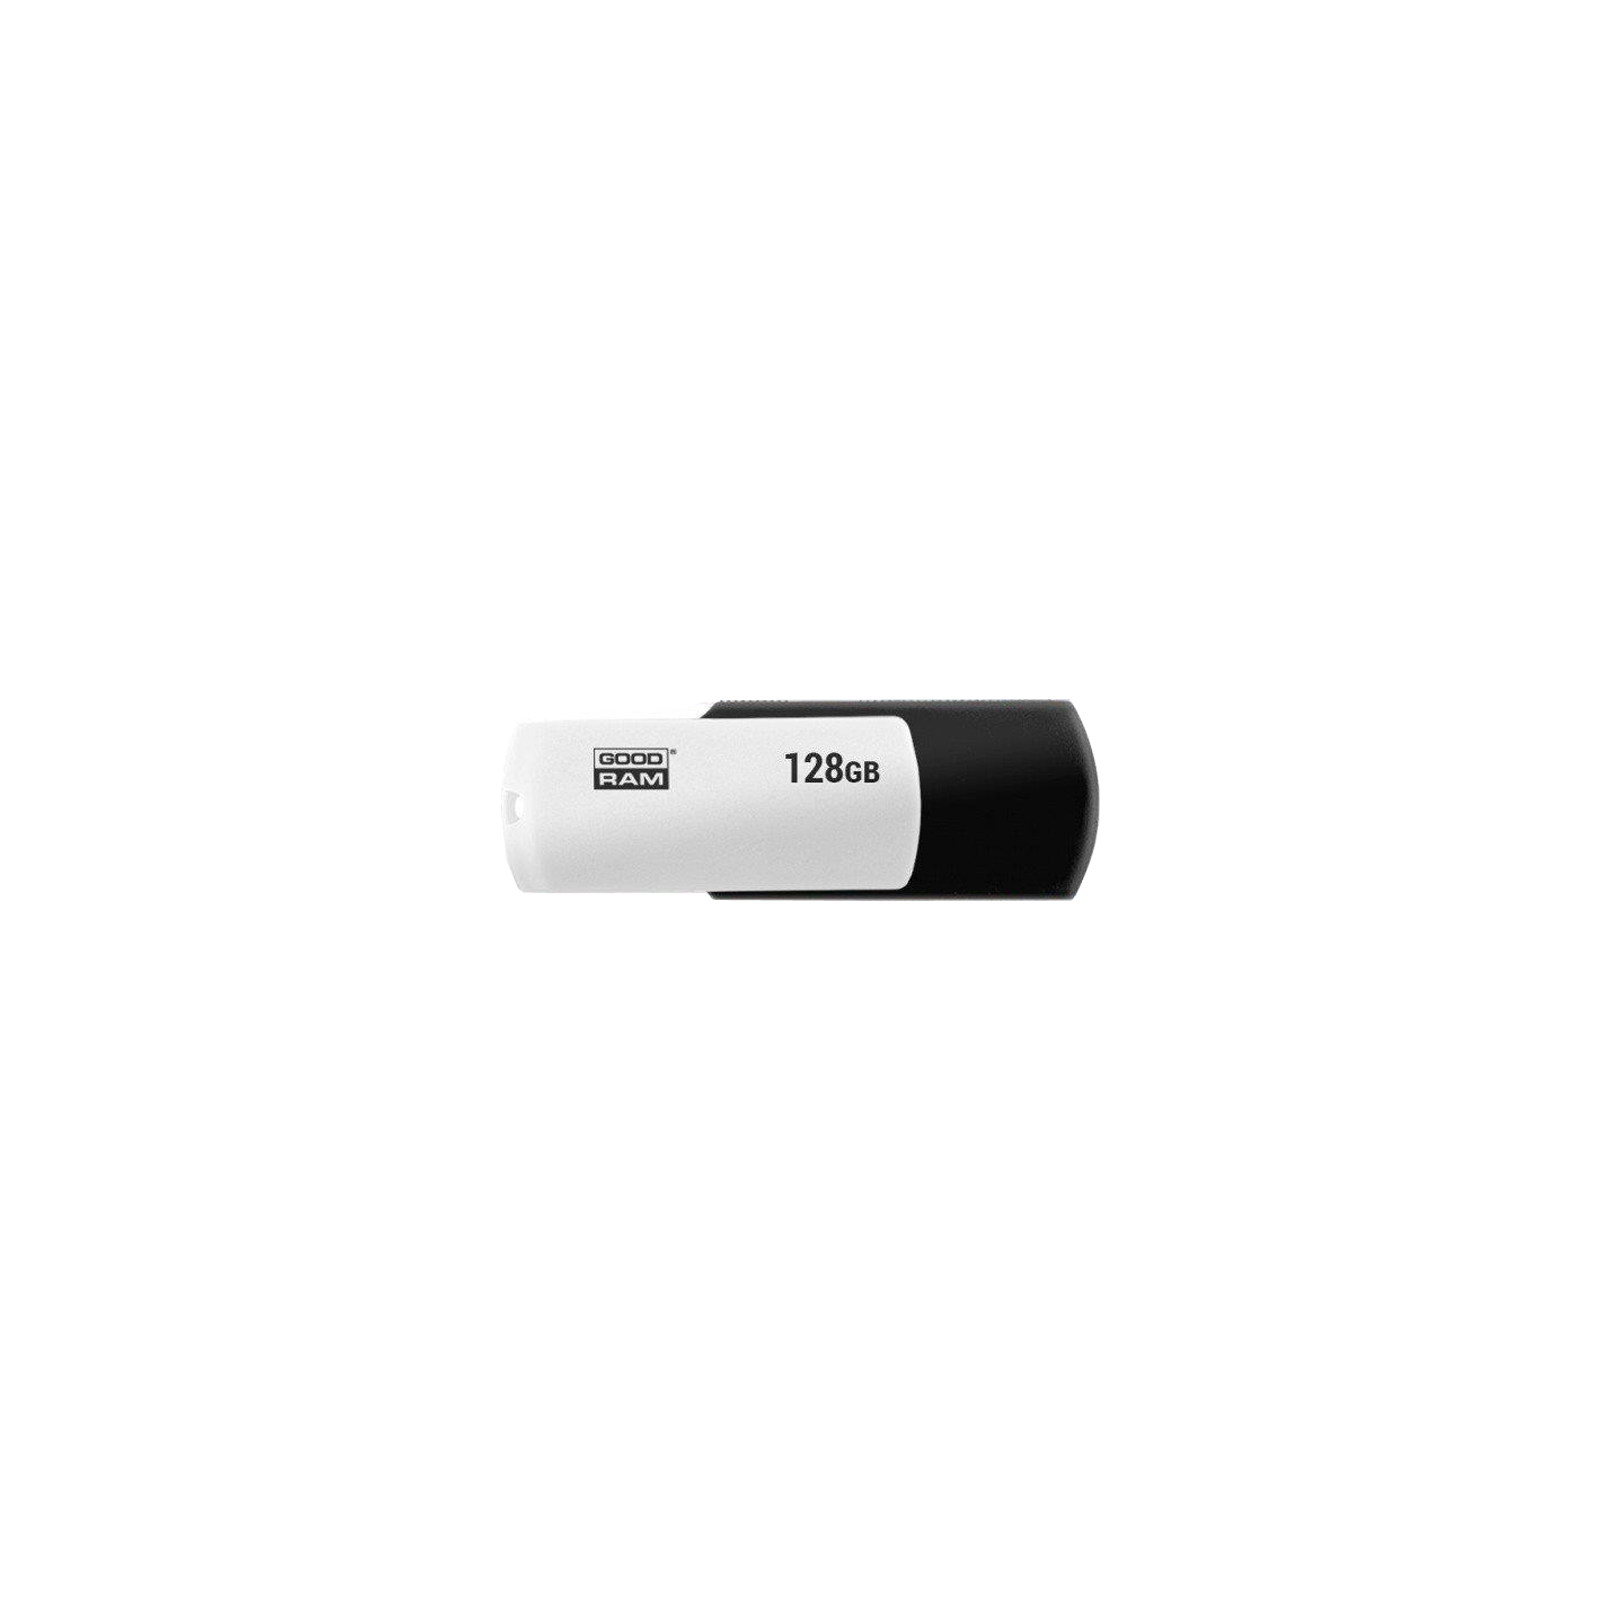 USB флеш накопитель Goodram 32GB UCO2 (Colour Mix) Black/White USB 2.0 (UCO2-0320KWR11)